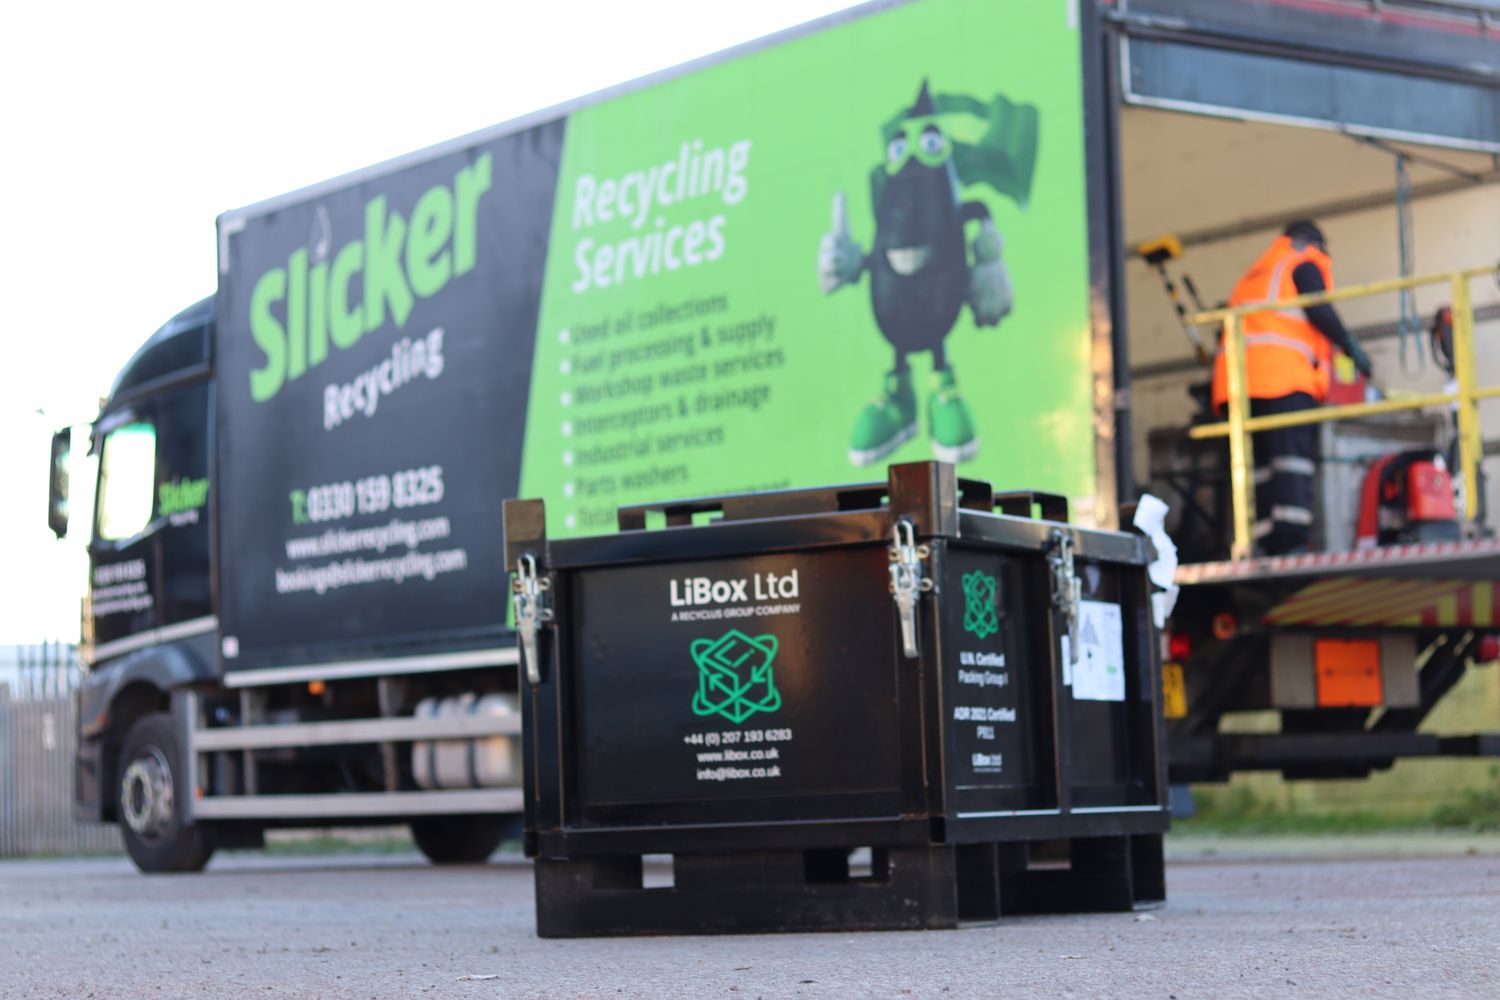 Slicker Recycling & Recyclus